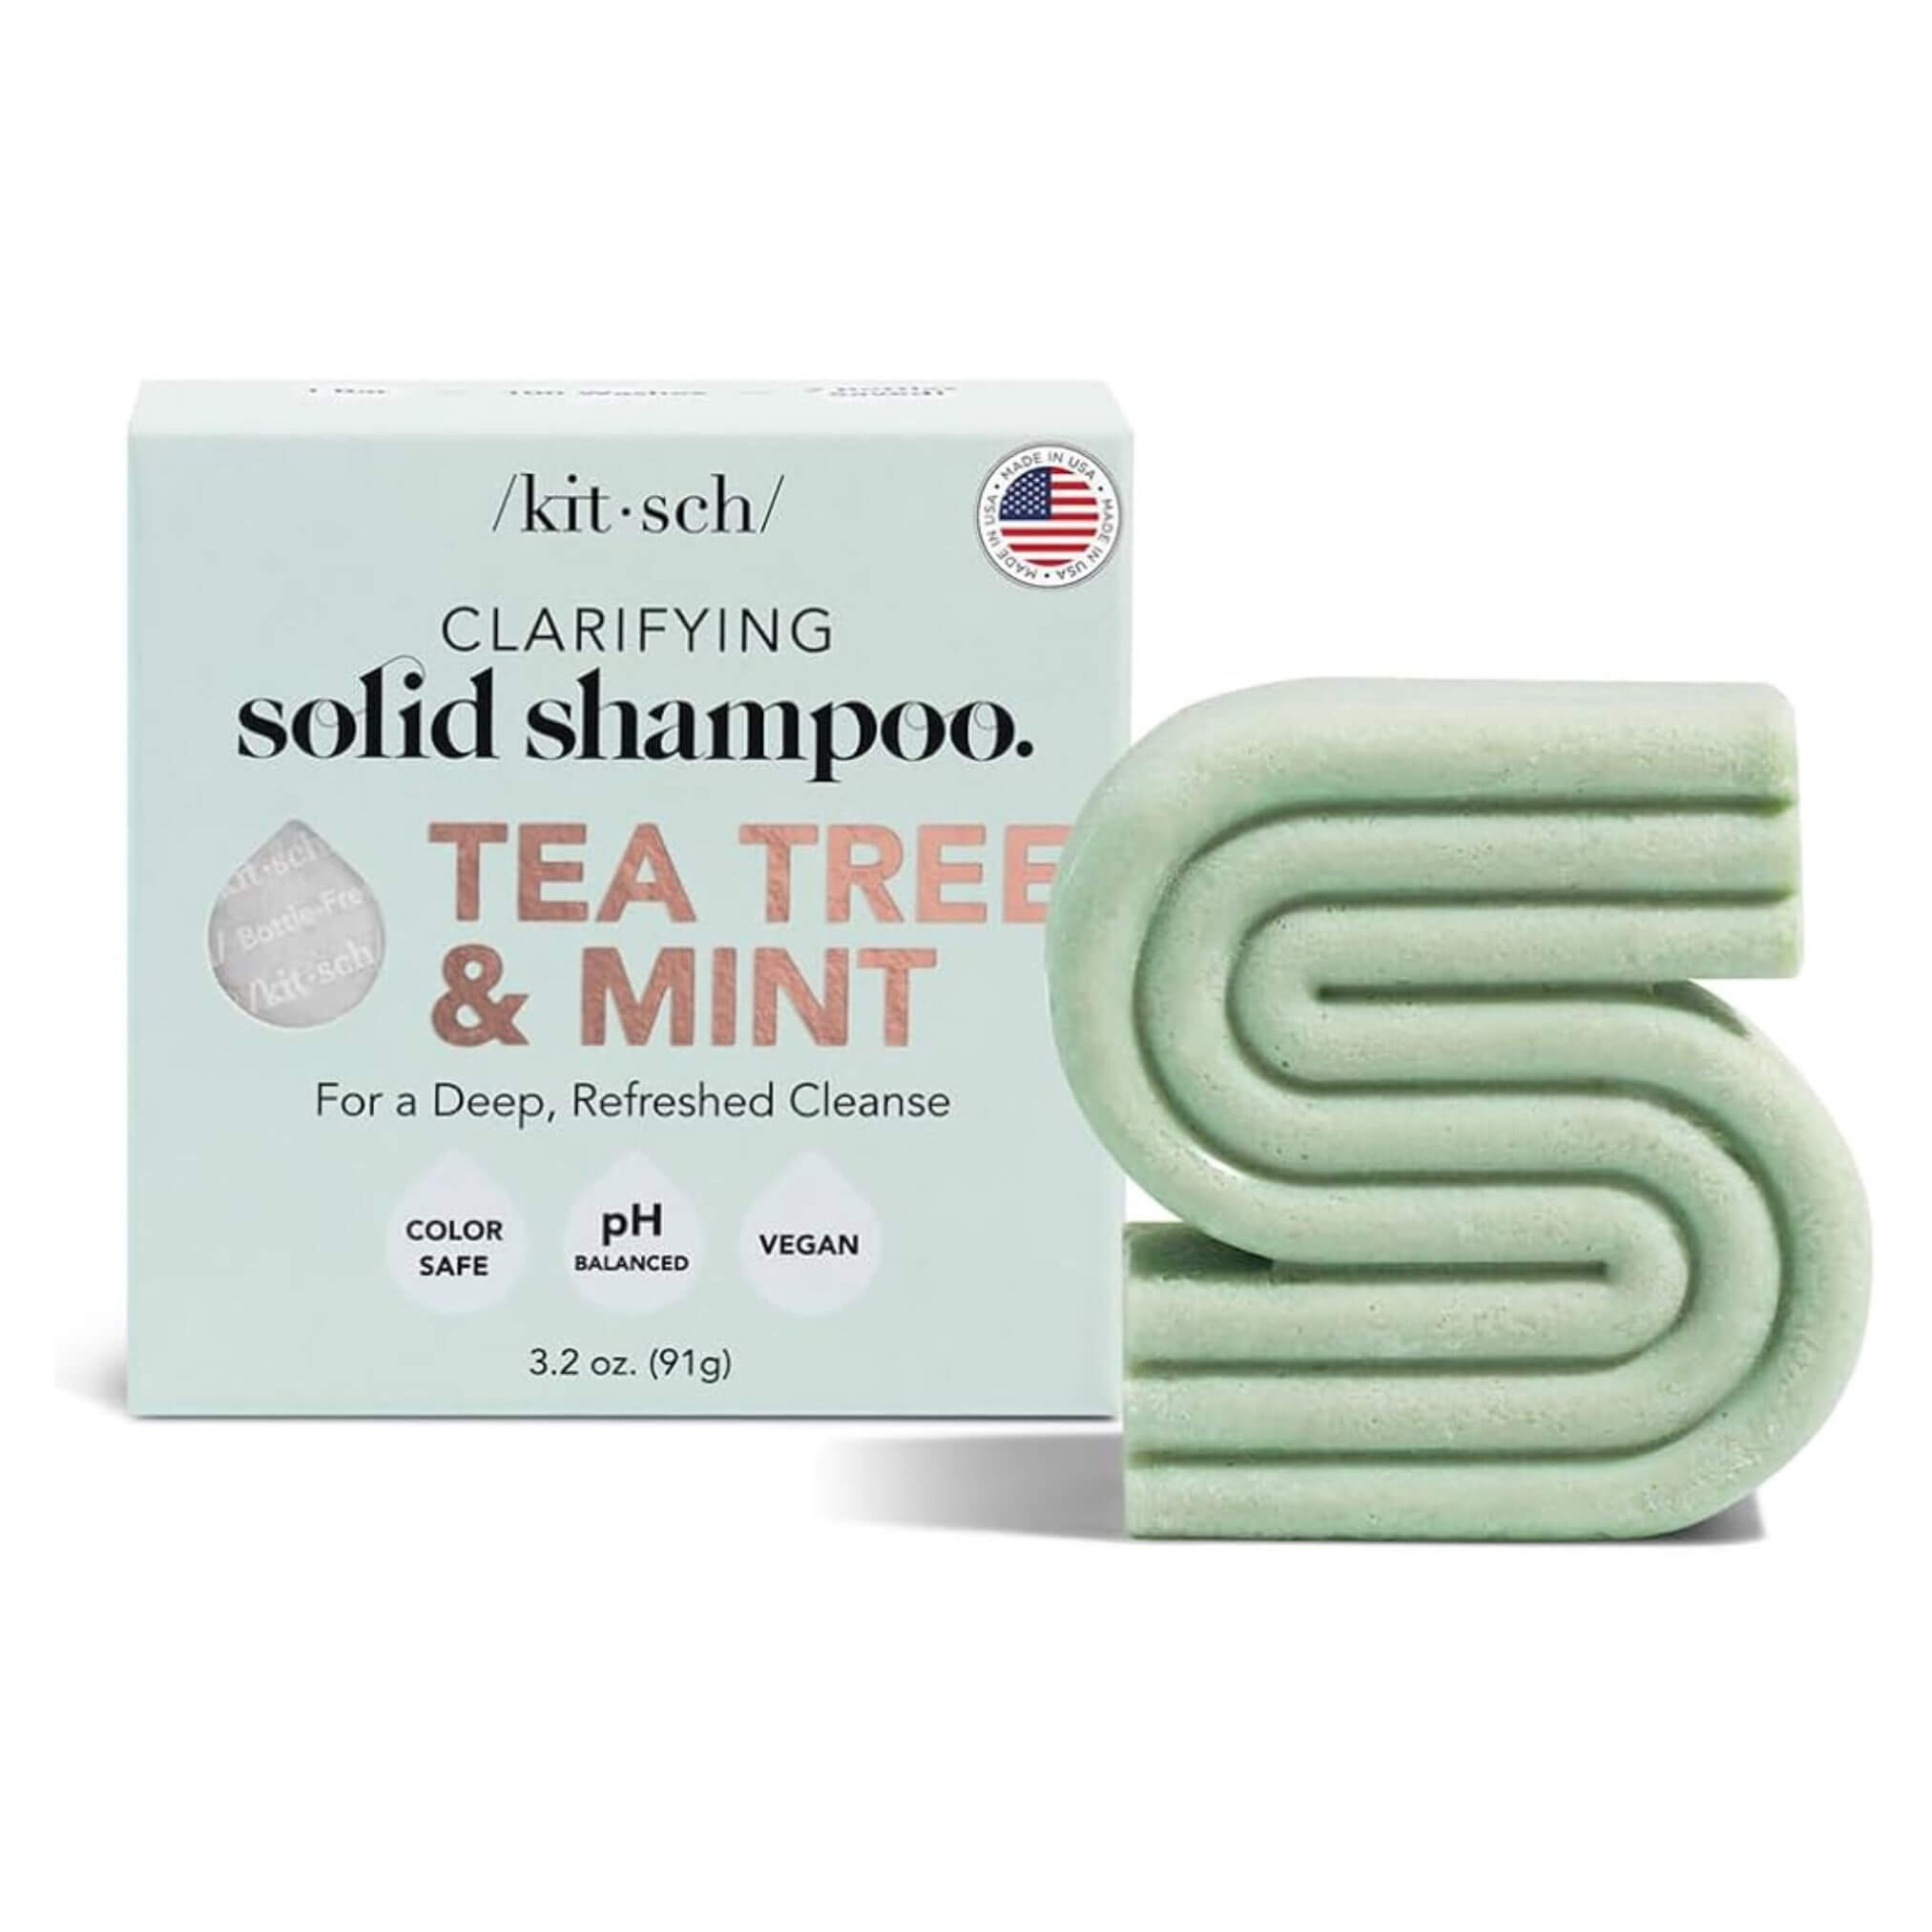 Clarifying Shampoo Bar - Tea Tree + Mint - The Plastic Free Co.